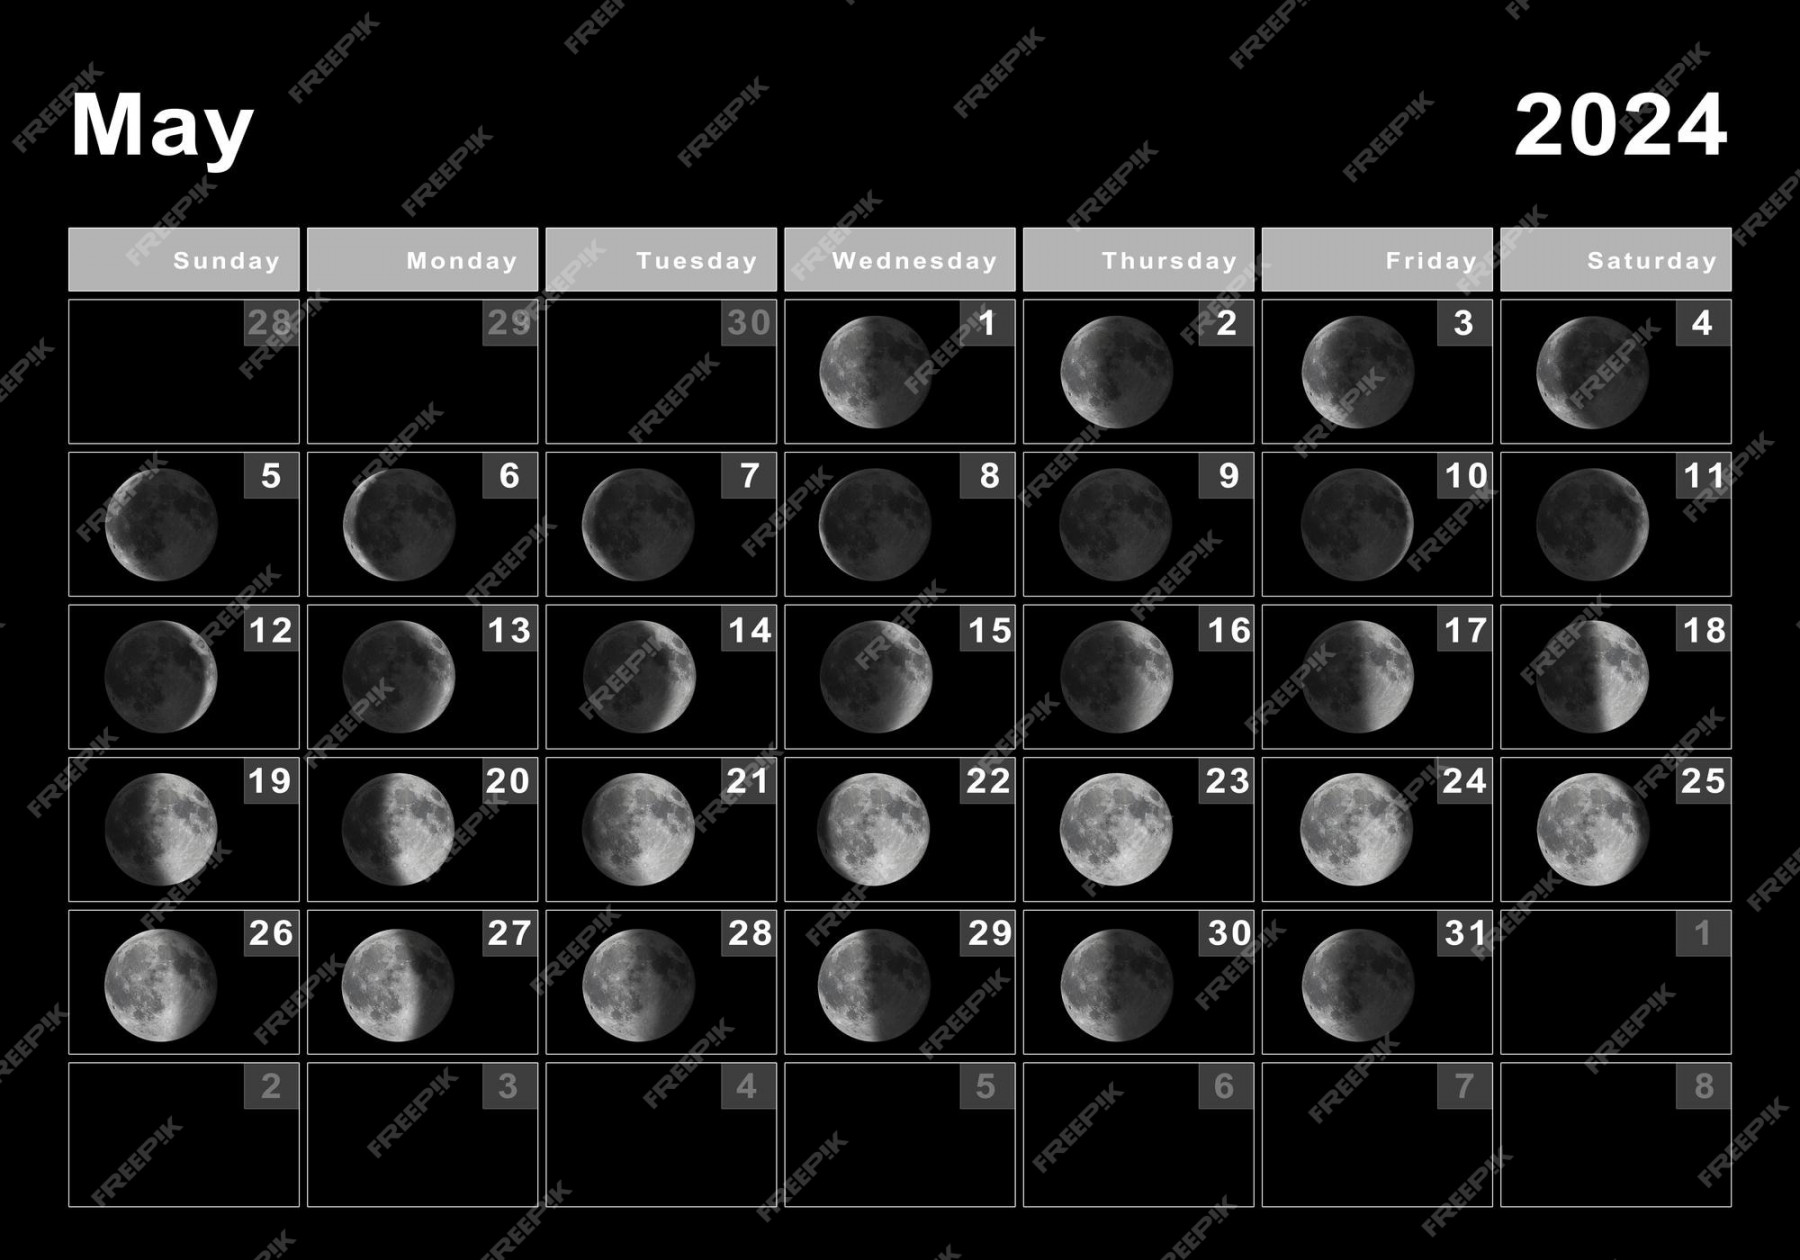 premium photo may lunar calendar moon cycles moon phases